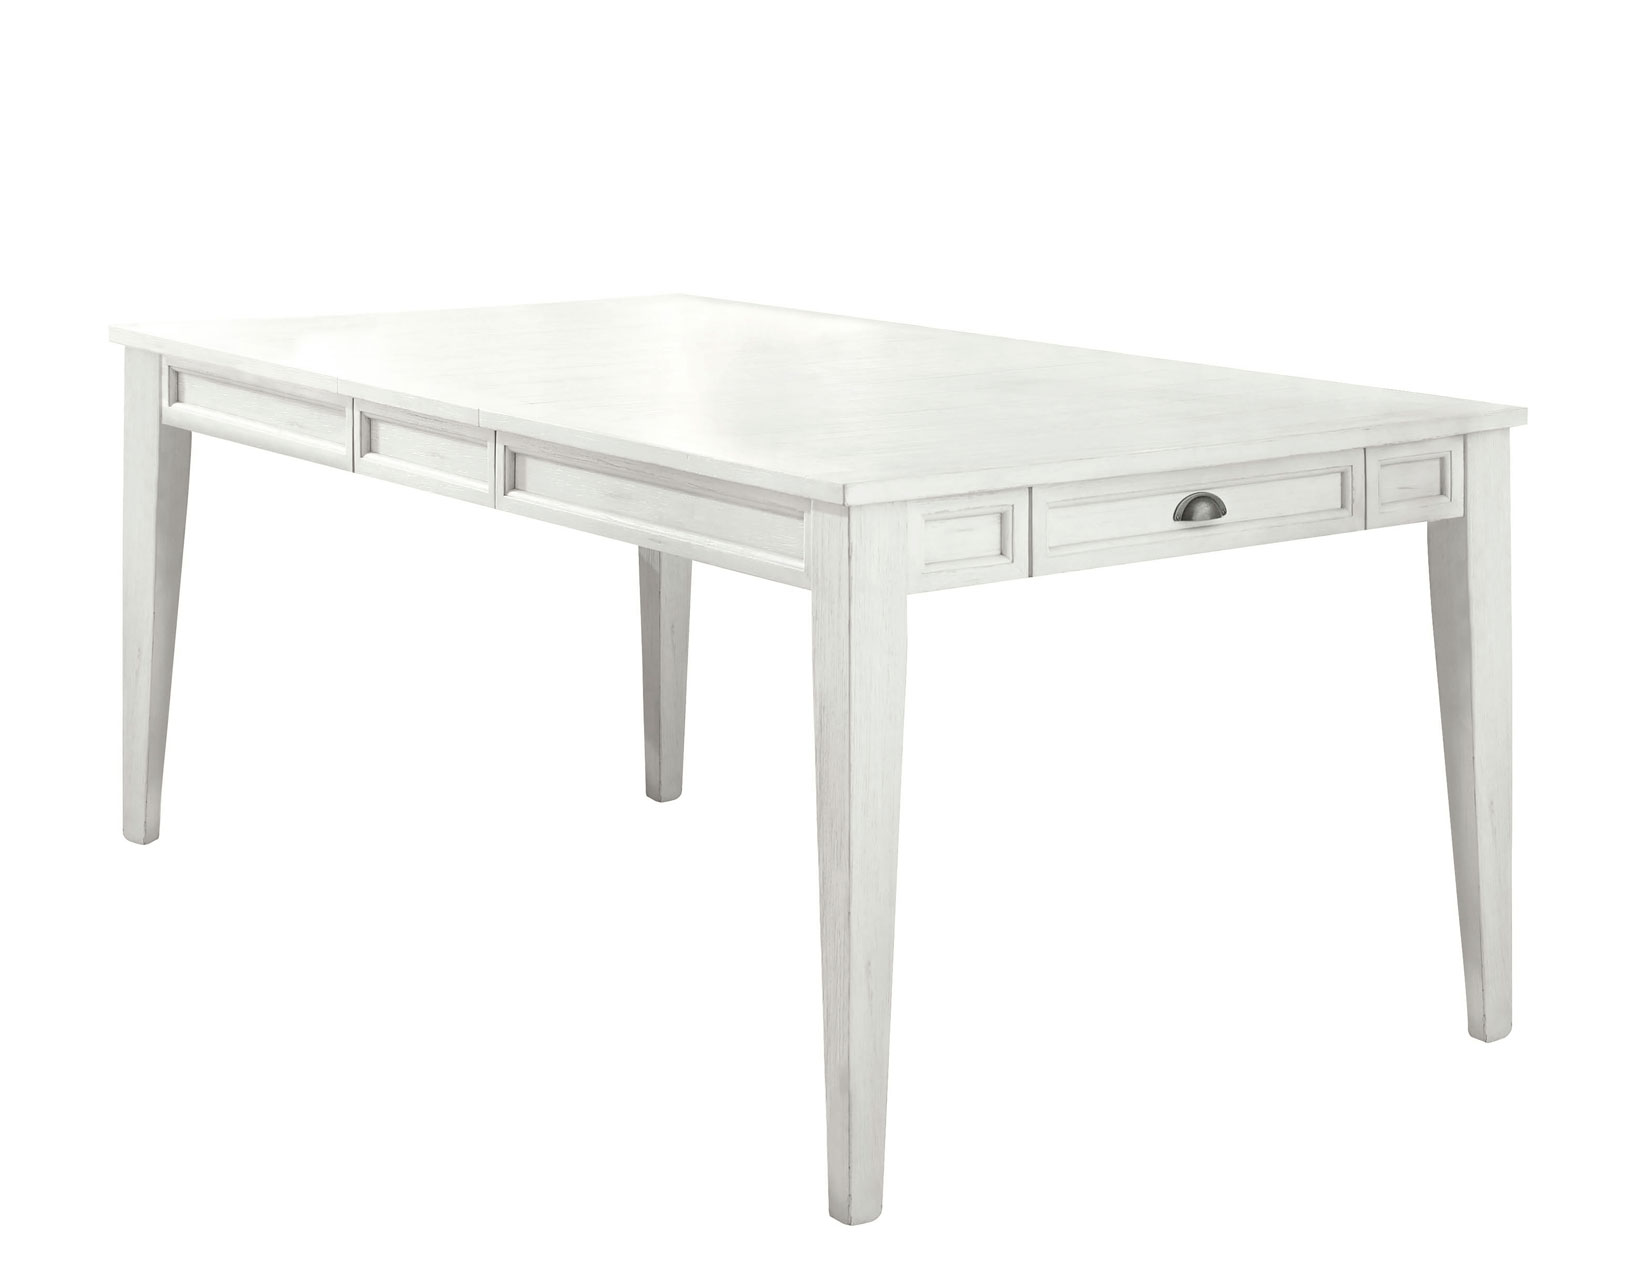 Cayla  64-80 inch Table w/16" Leaf, White - DFW